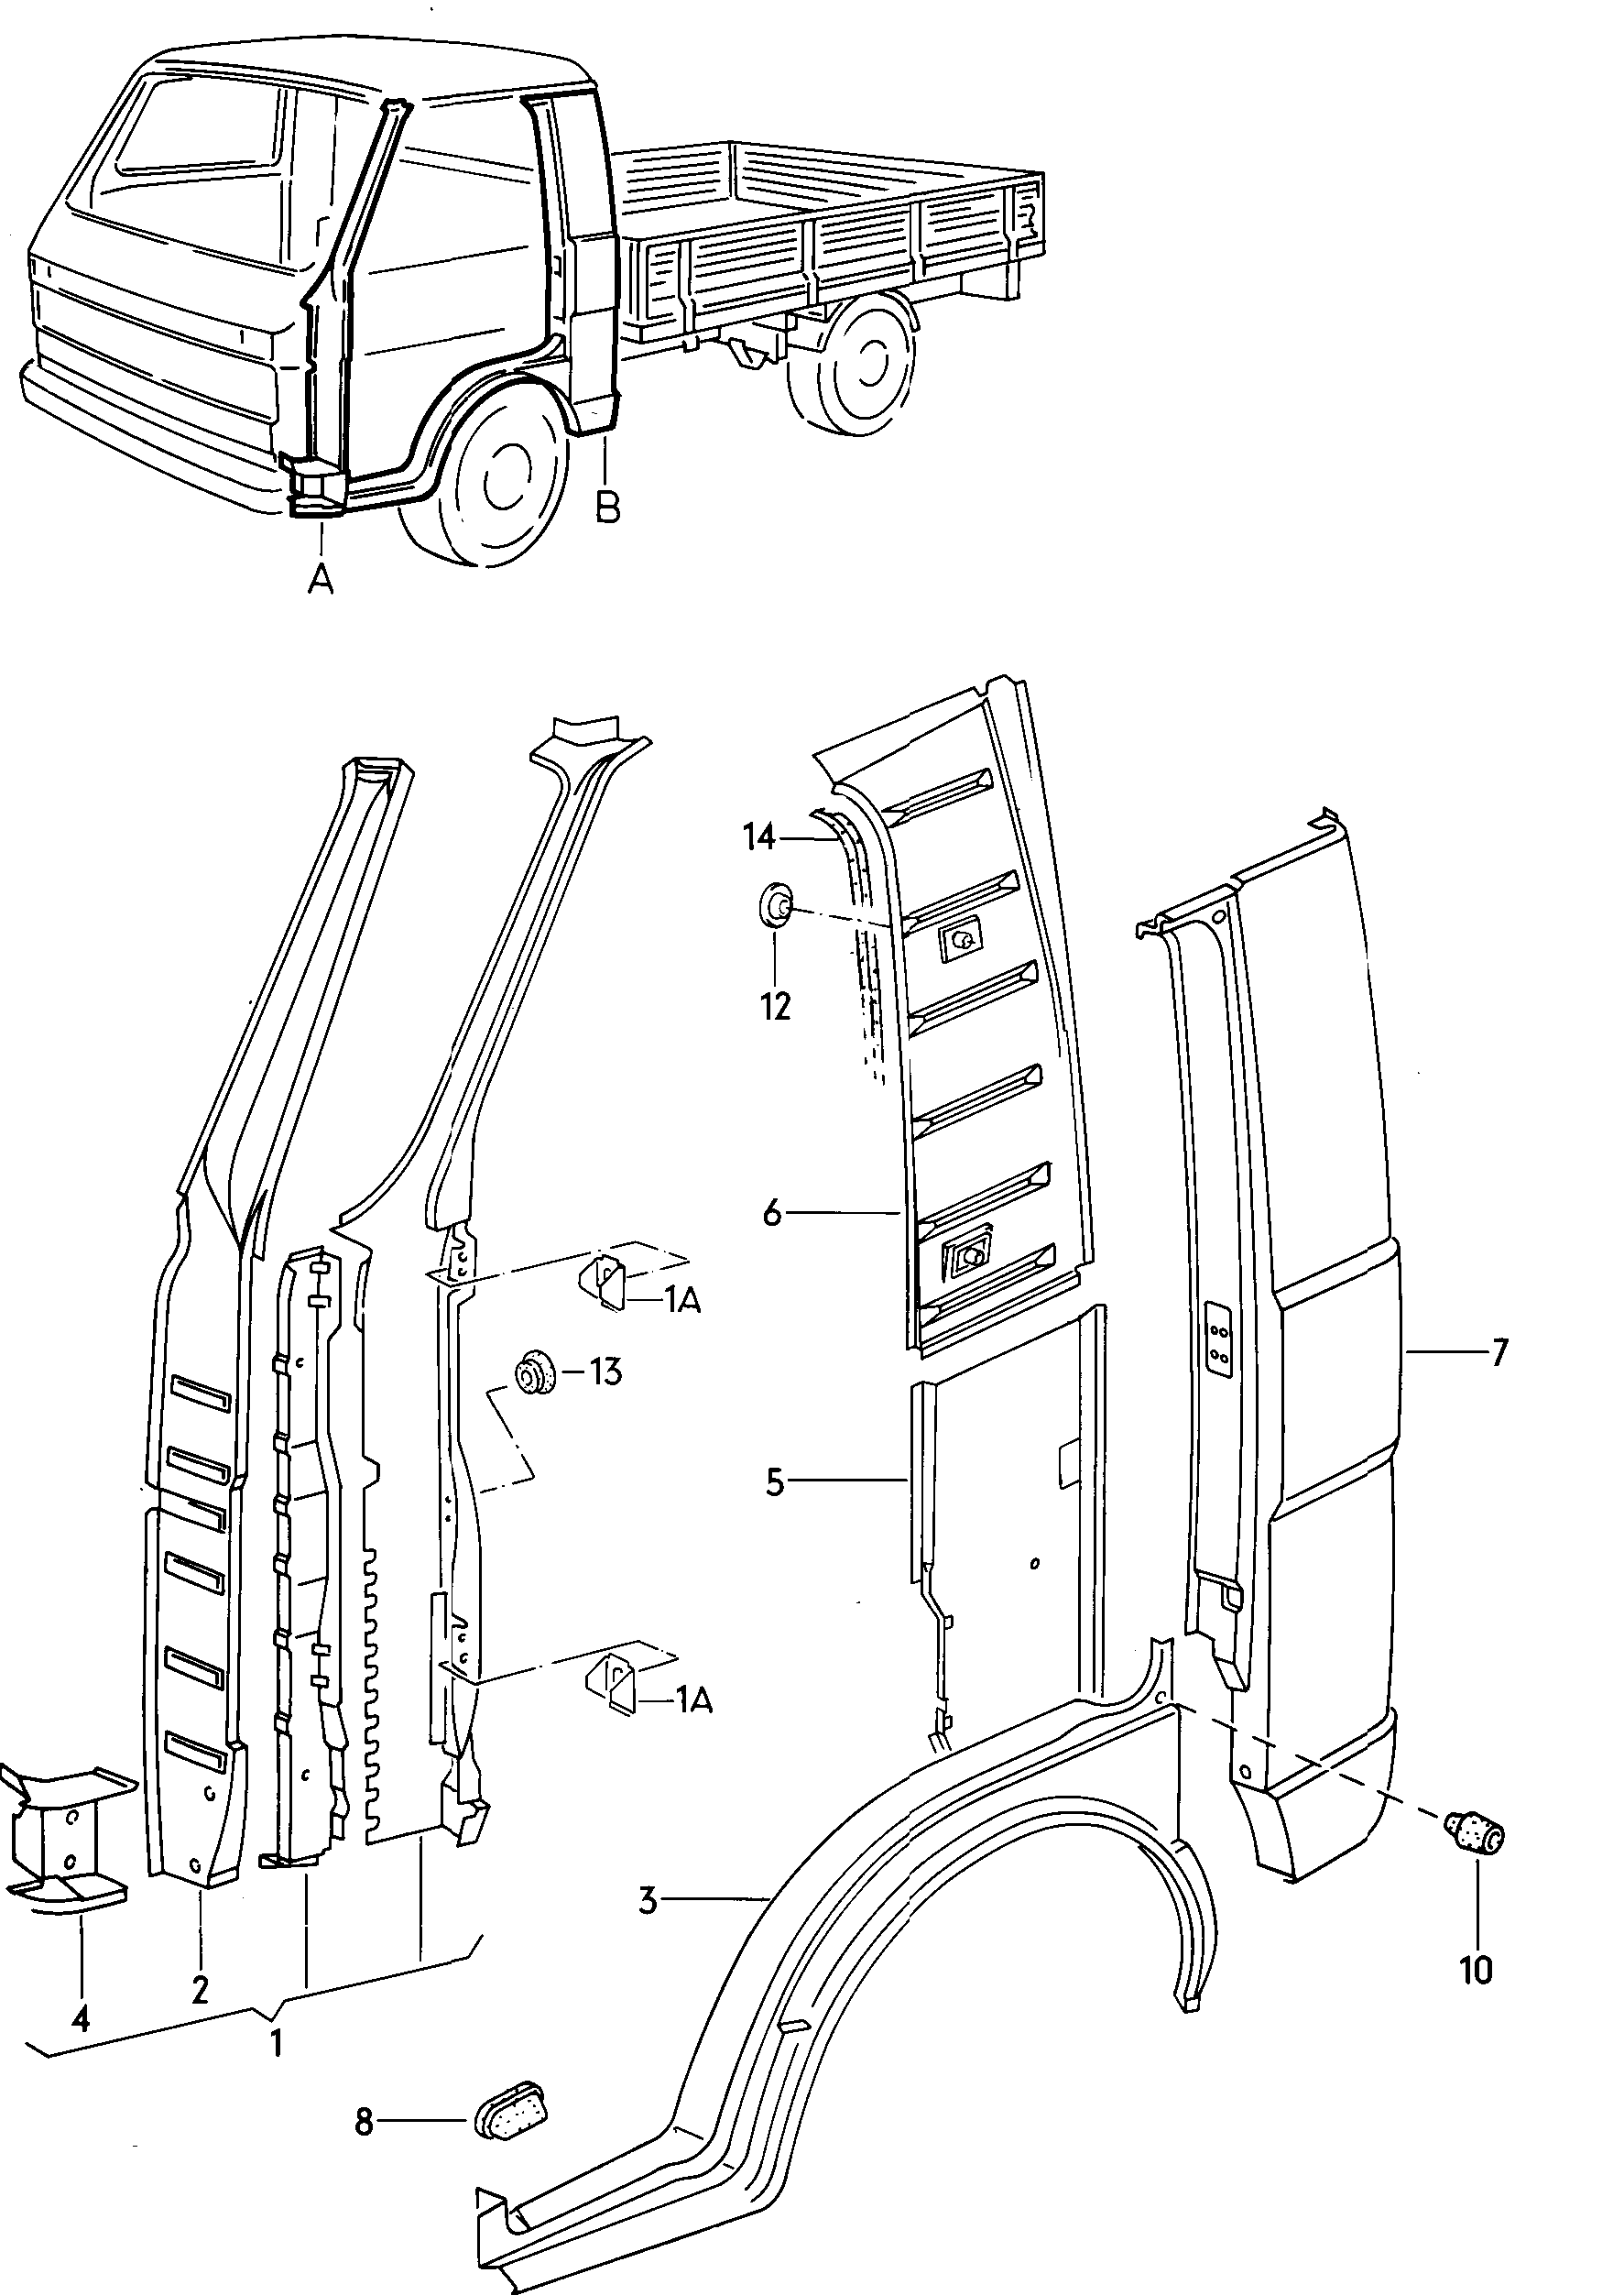 a and b-pillar, knee piece pick-up - LT, LT 4x4 - lt